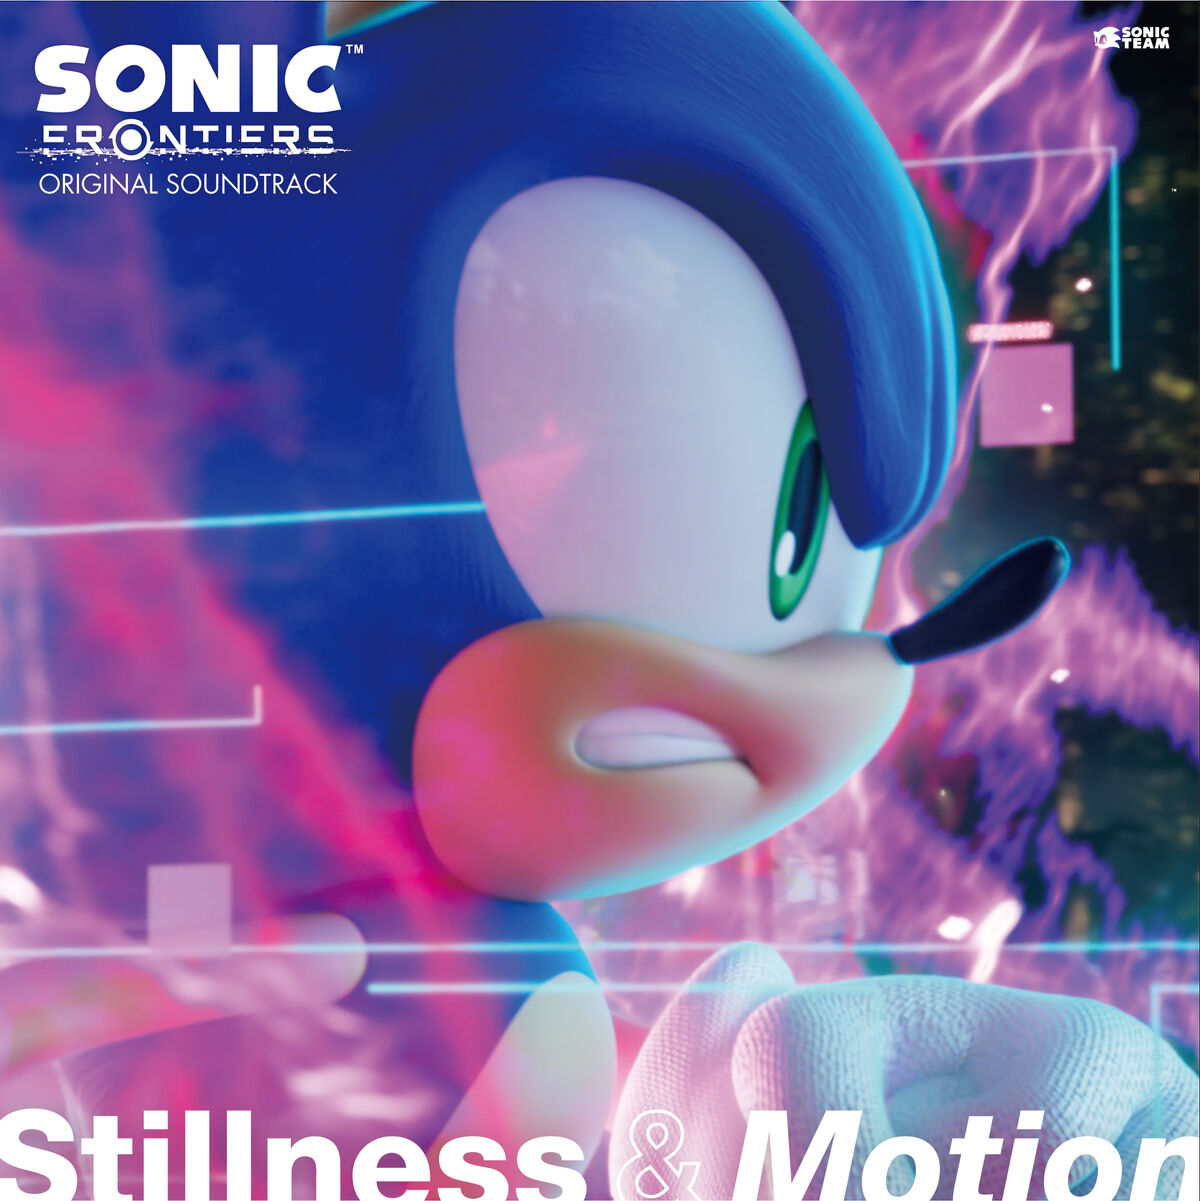 Sonic the Hedgehog 4: Episode I Original Soundtrack